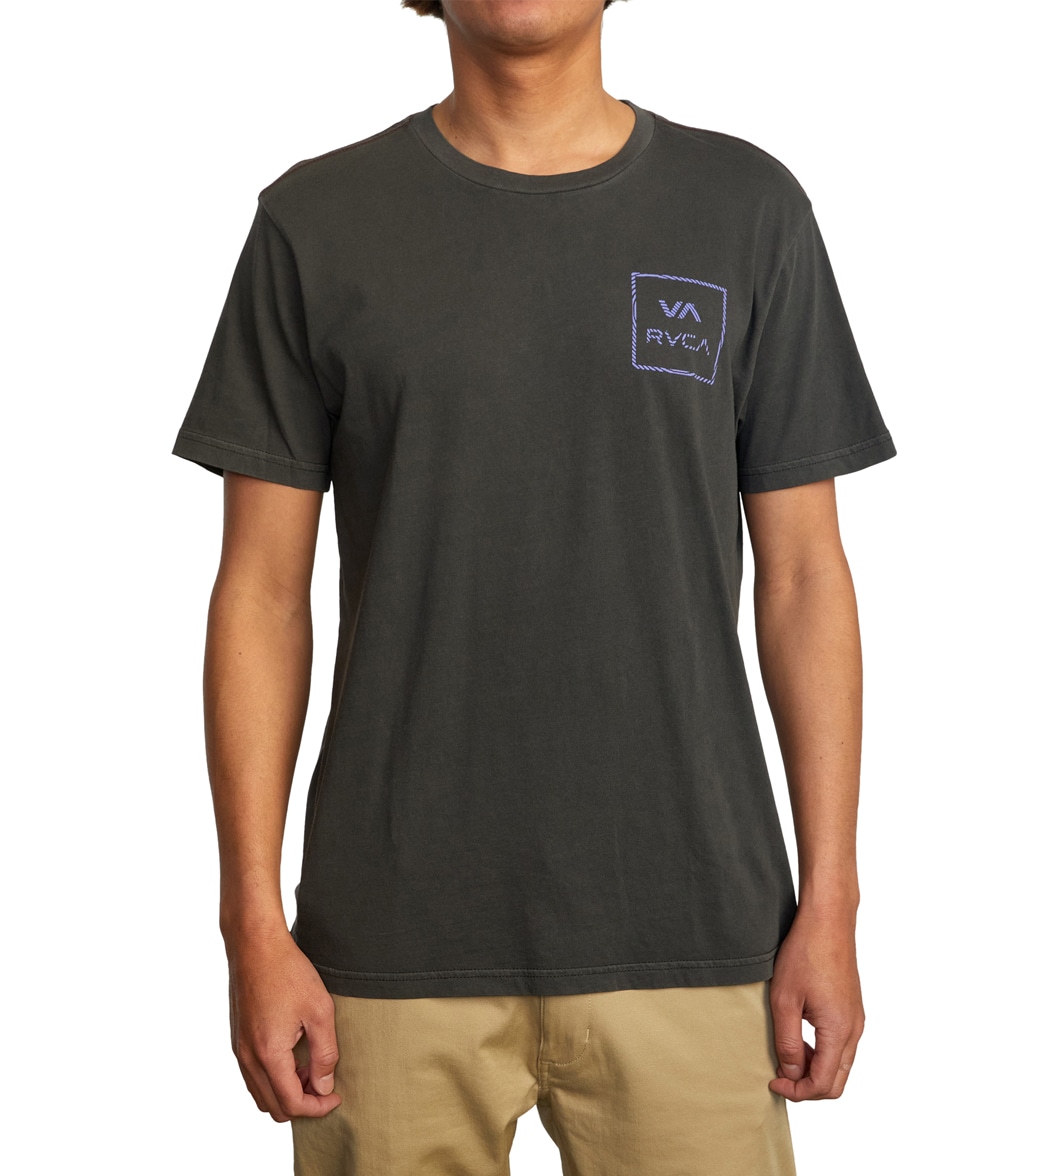 Rvca Men's All The Way Short Sleeve Tee Shirt - Black Large Cotton - Swimoutlet.com